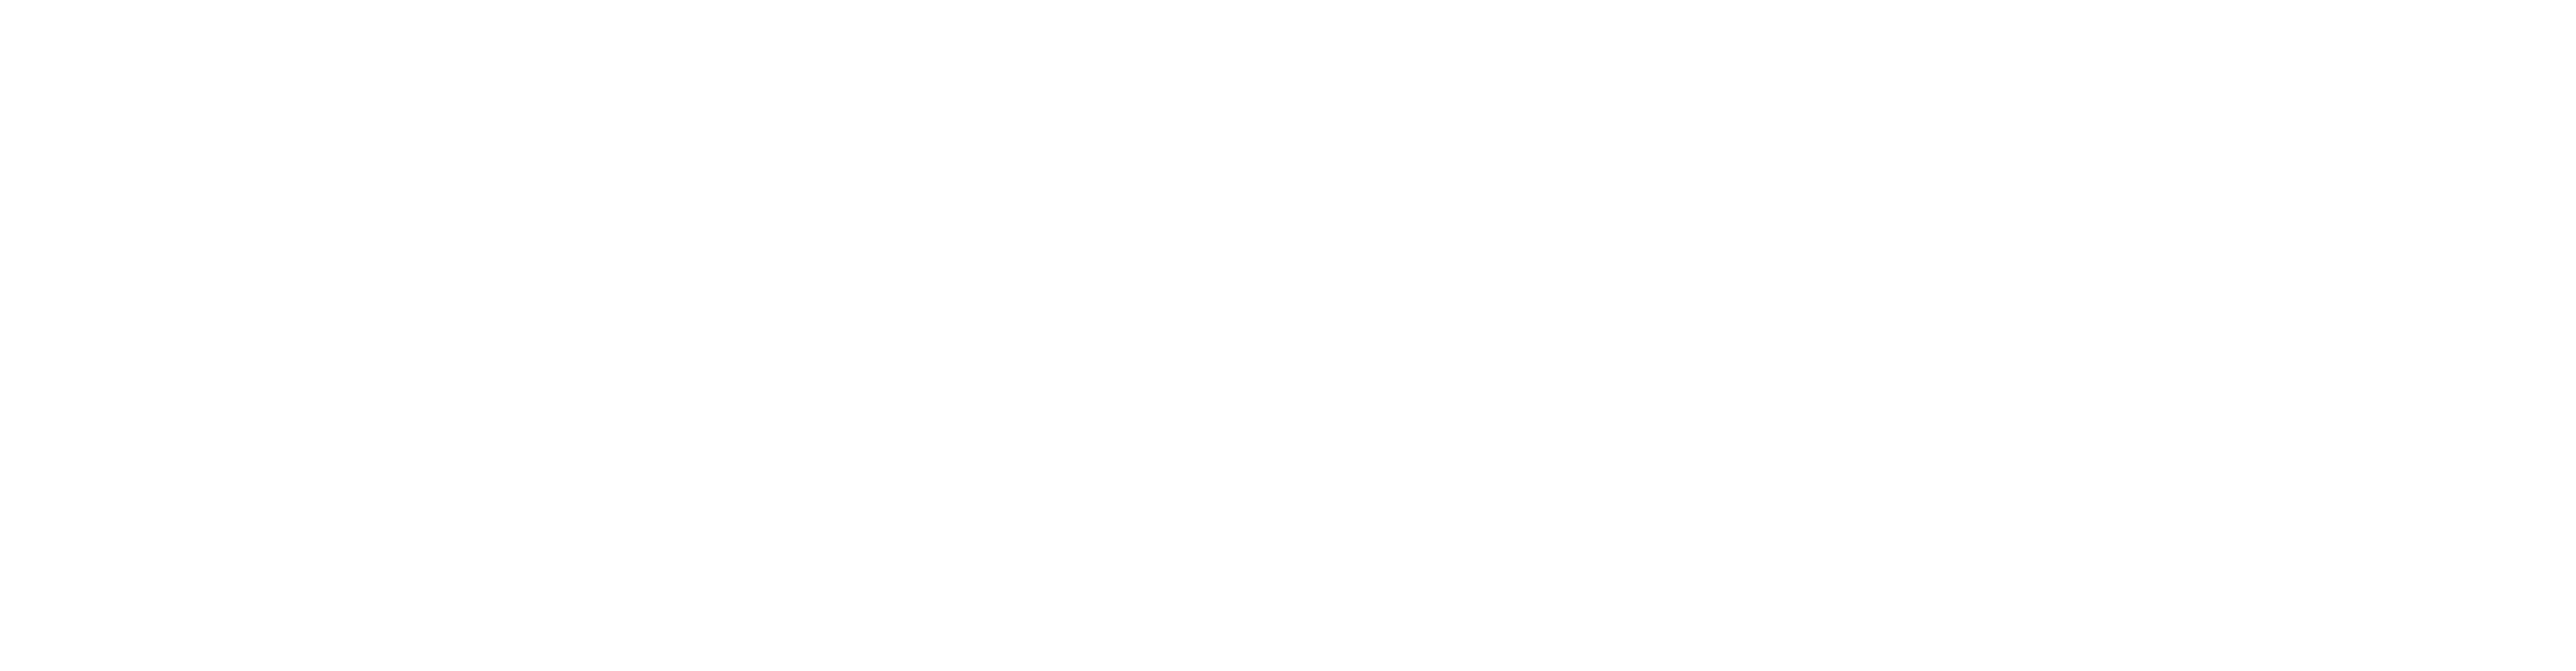 The Briggs Companies logo